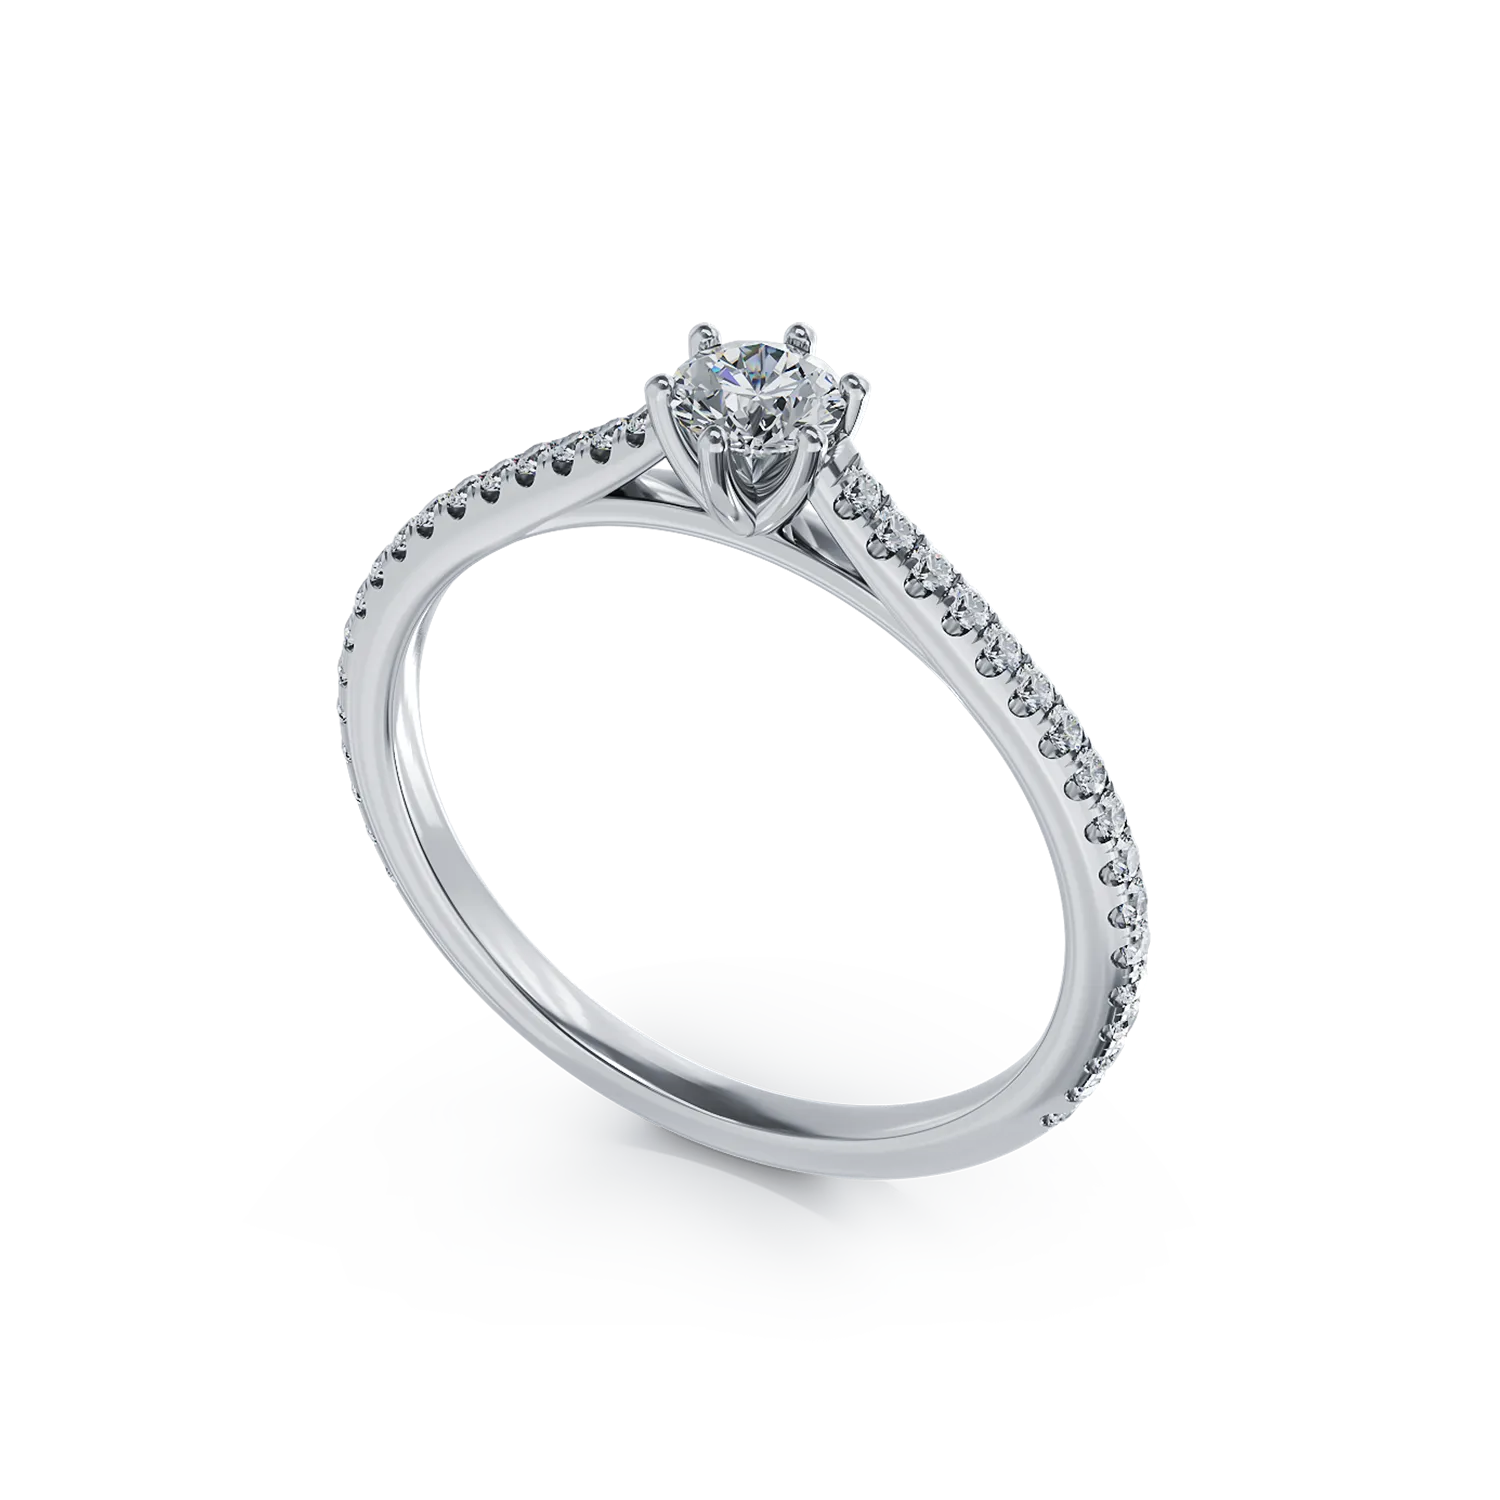 Platinum engagement ring with 0.193ct diamond and 0.18ct diamonds